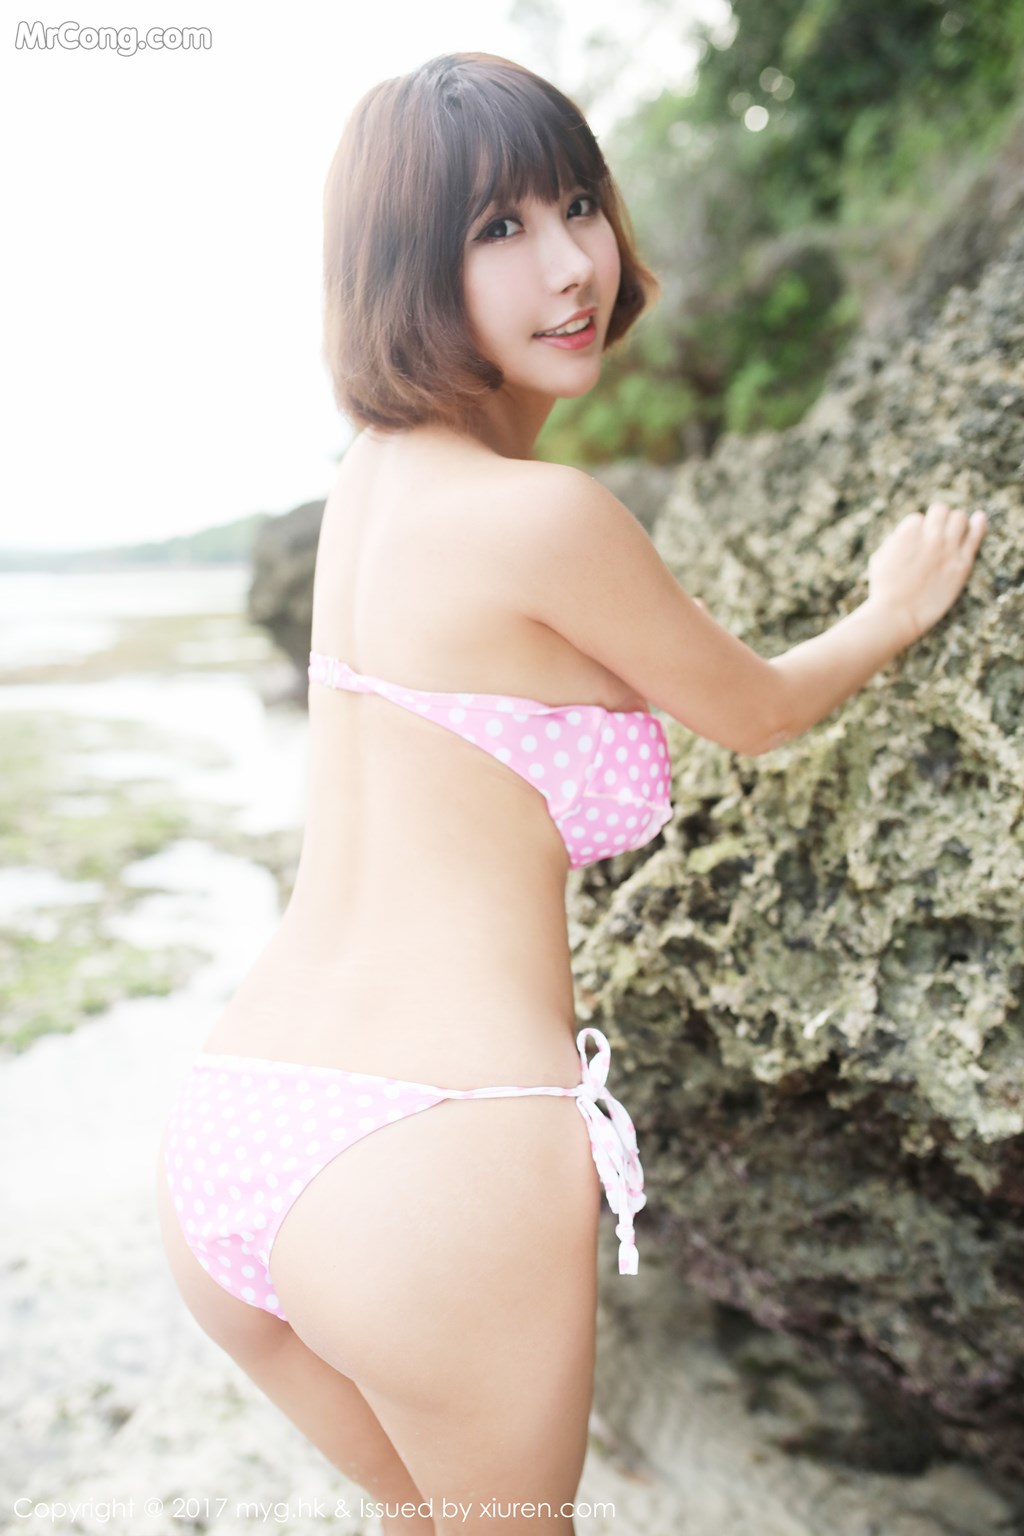 MyGirl Vol. 677: Sunny Model (晓 茜) (77 photos)